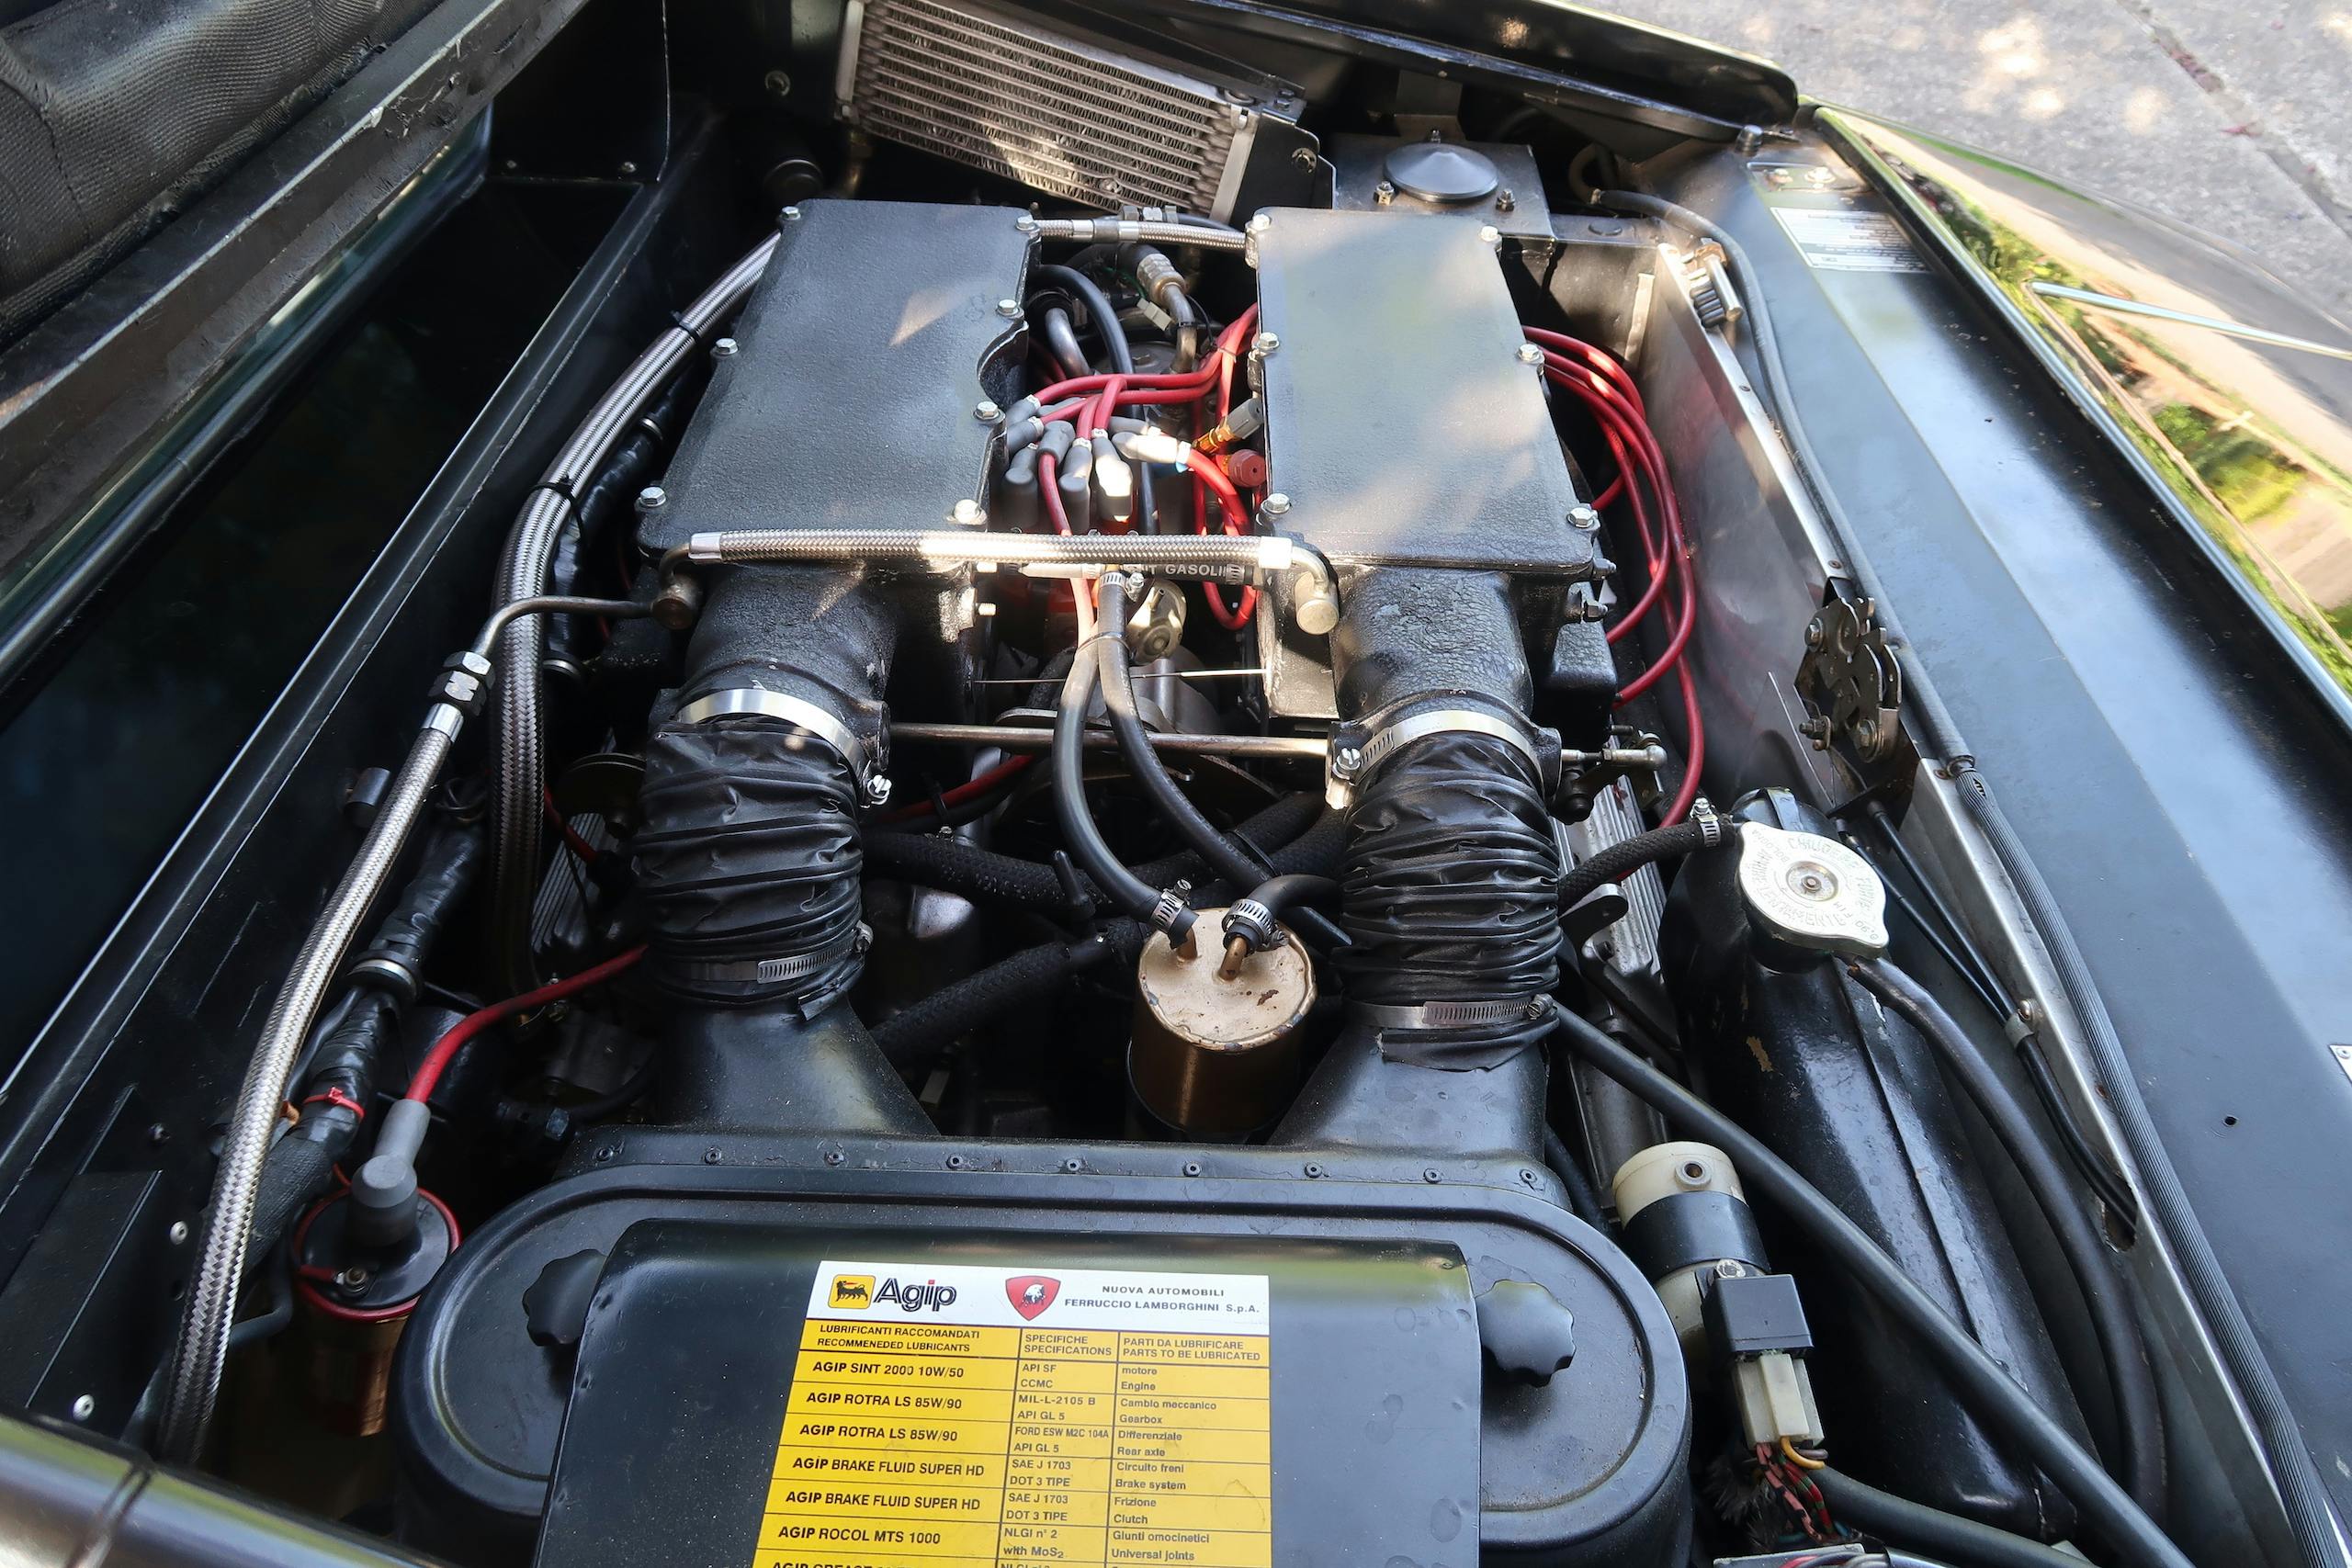 1986 Lamborghini Jalpa engine